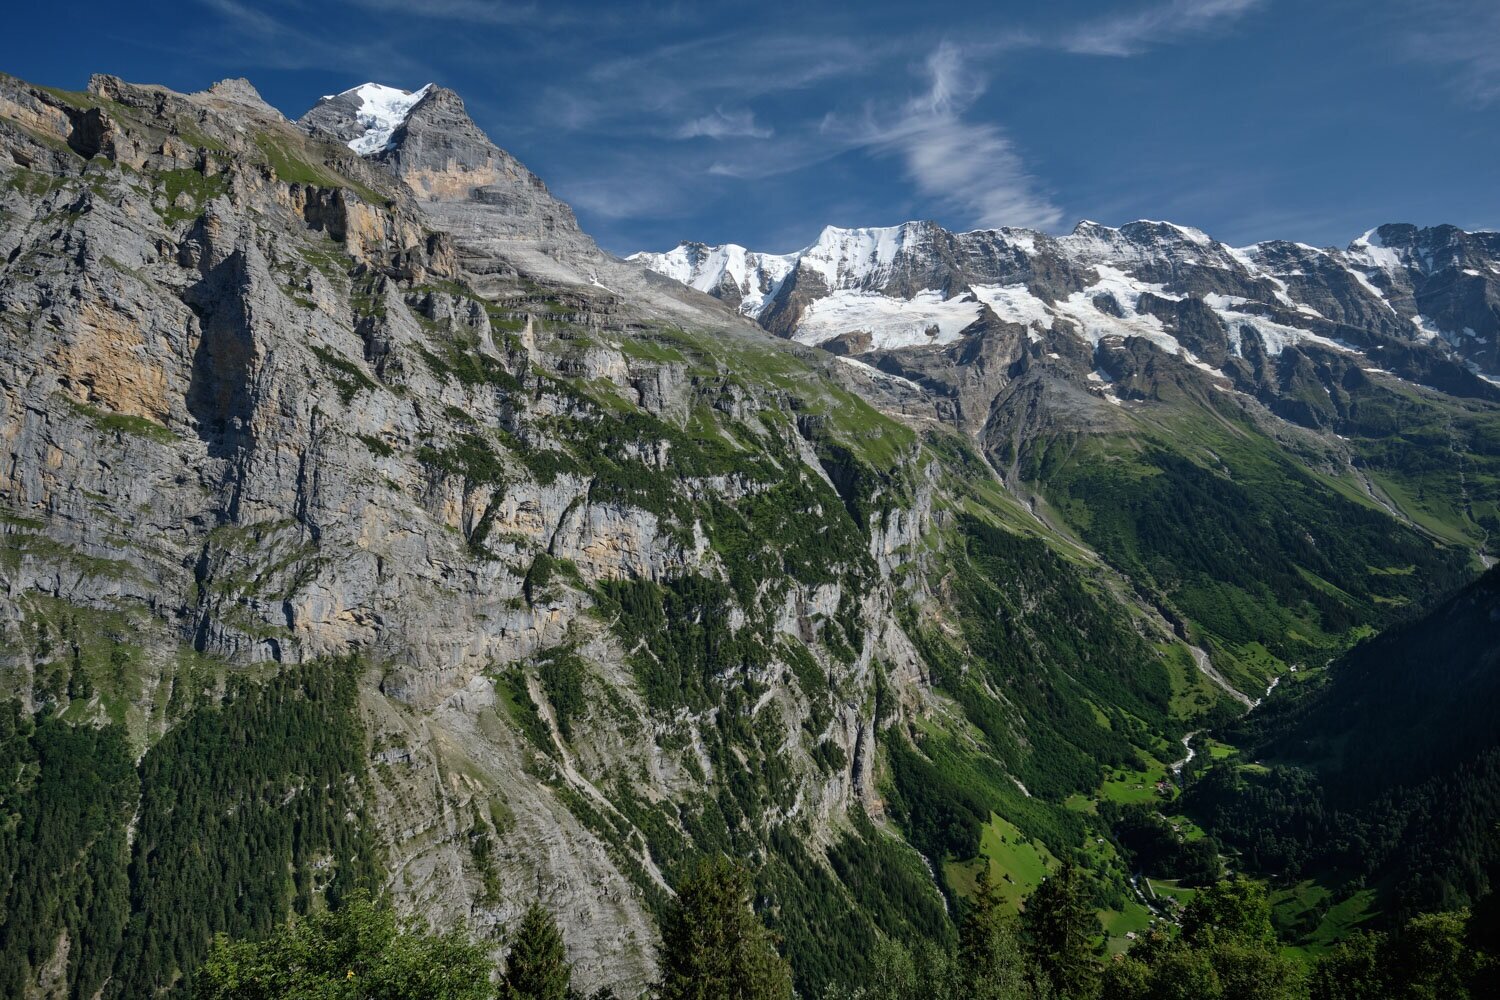 Upper Lauterbrunnen valley from Mürren